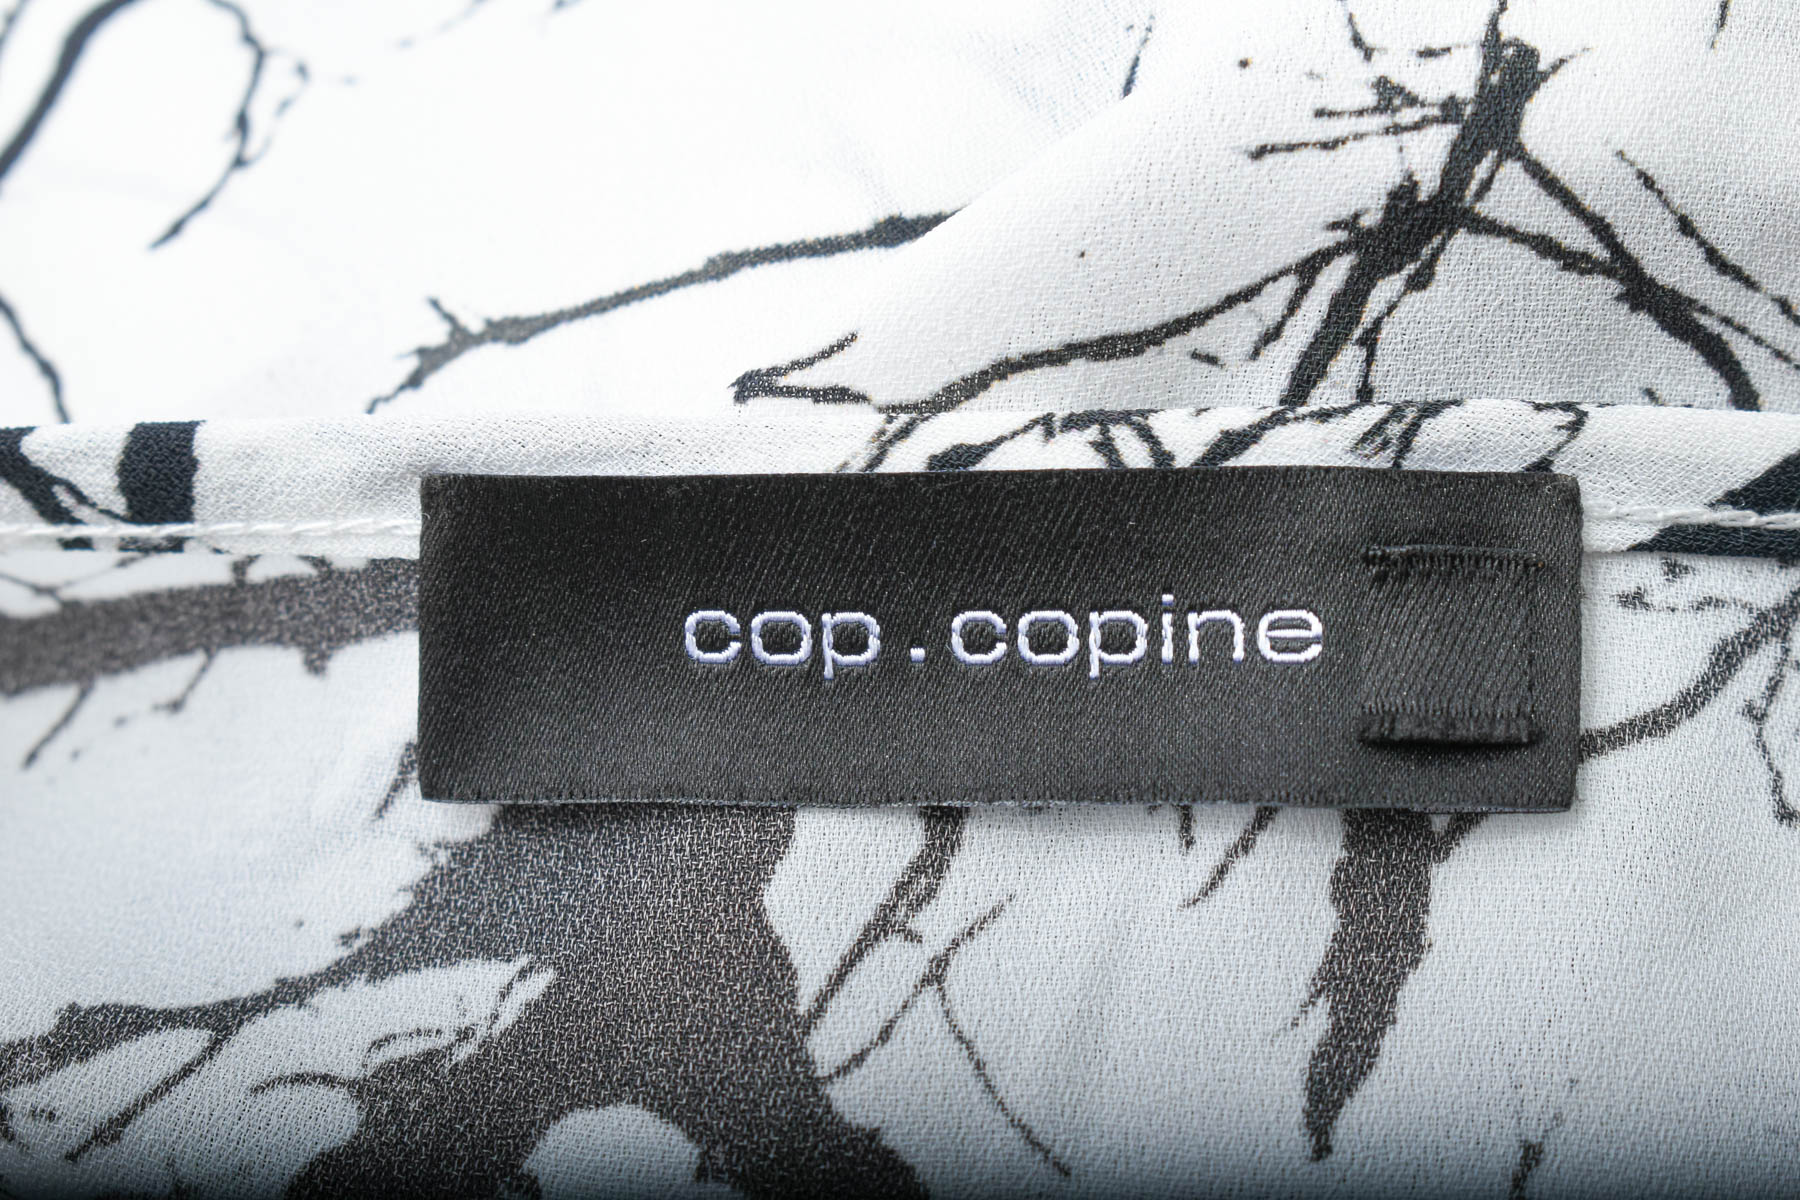 Rochiа - Cop. Copine - 2